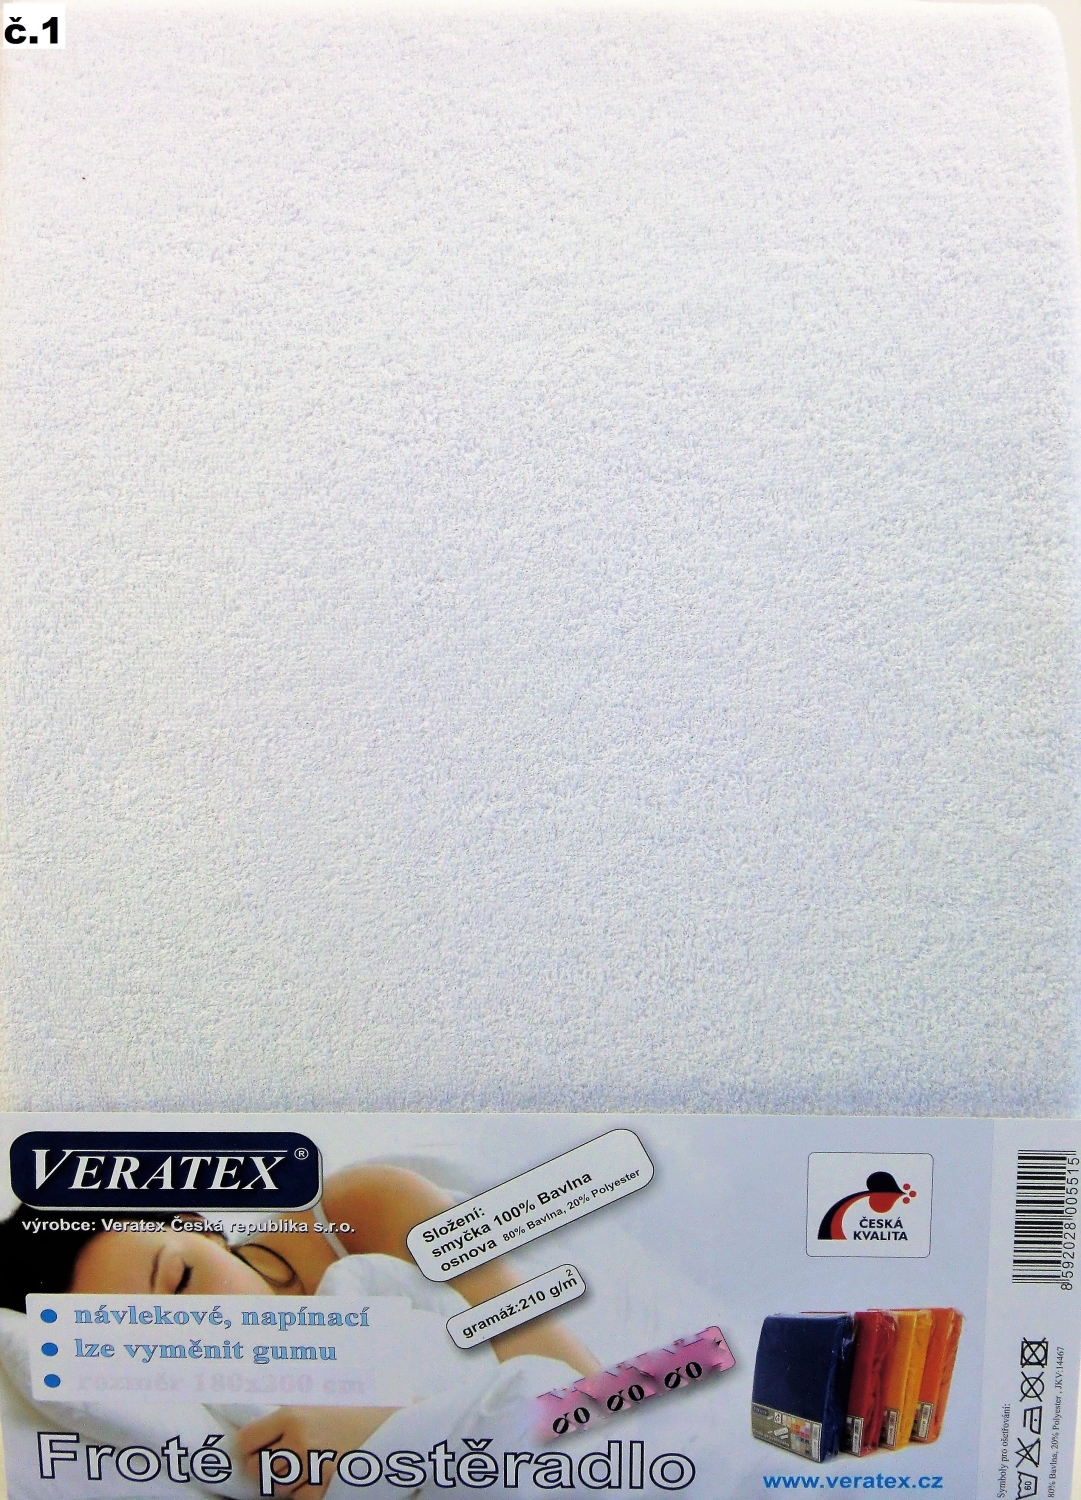 Veratex Froté prostěradlo na masážní lůžko 60x190 lehátko (č. 1-bílá) 60 x 190 cm